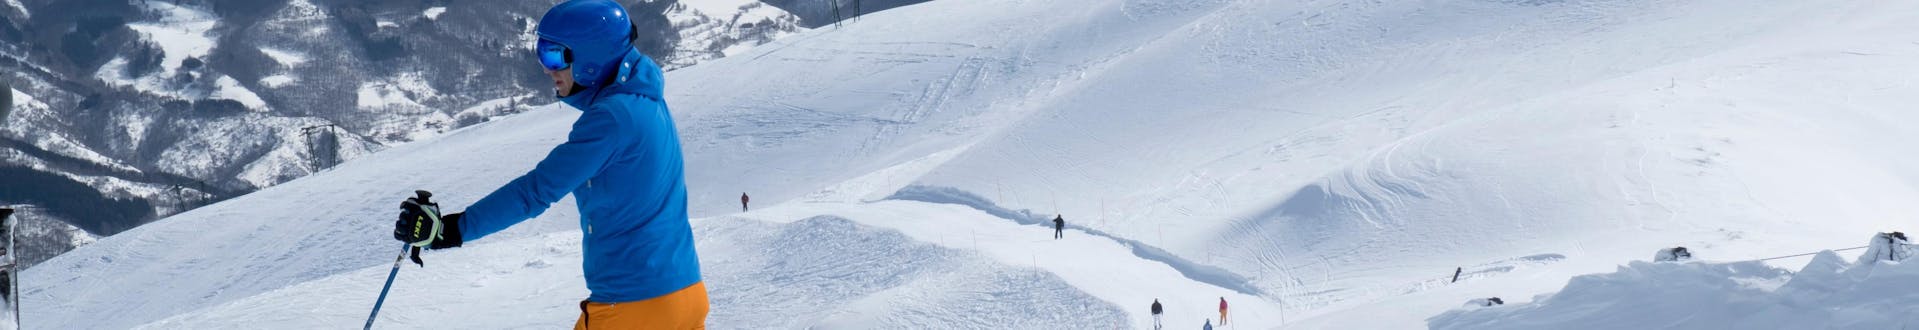 A skier goes down the slopes of the Abetone ski resort in Val di Luce where ski school teach ski lessons.